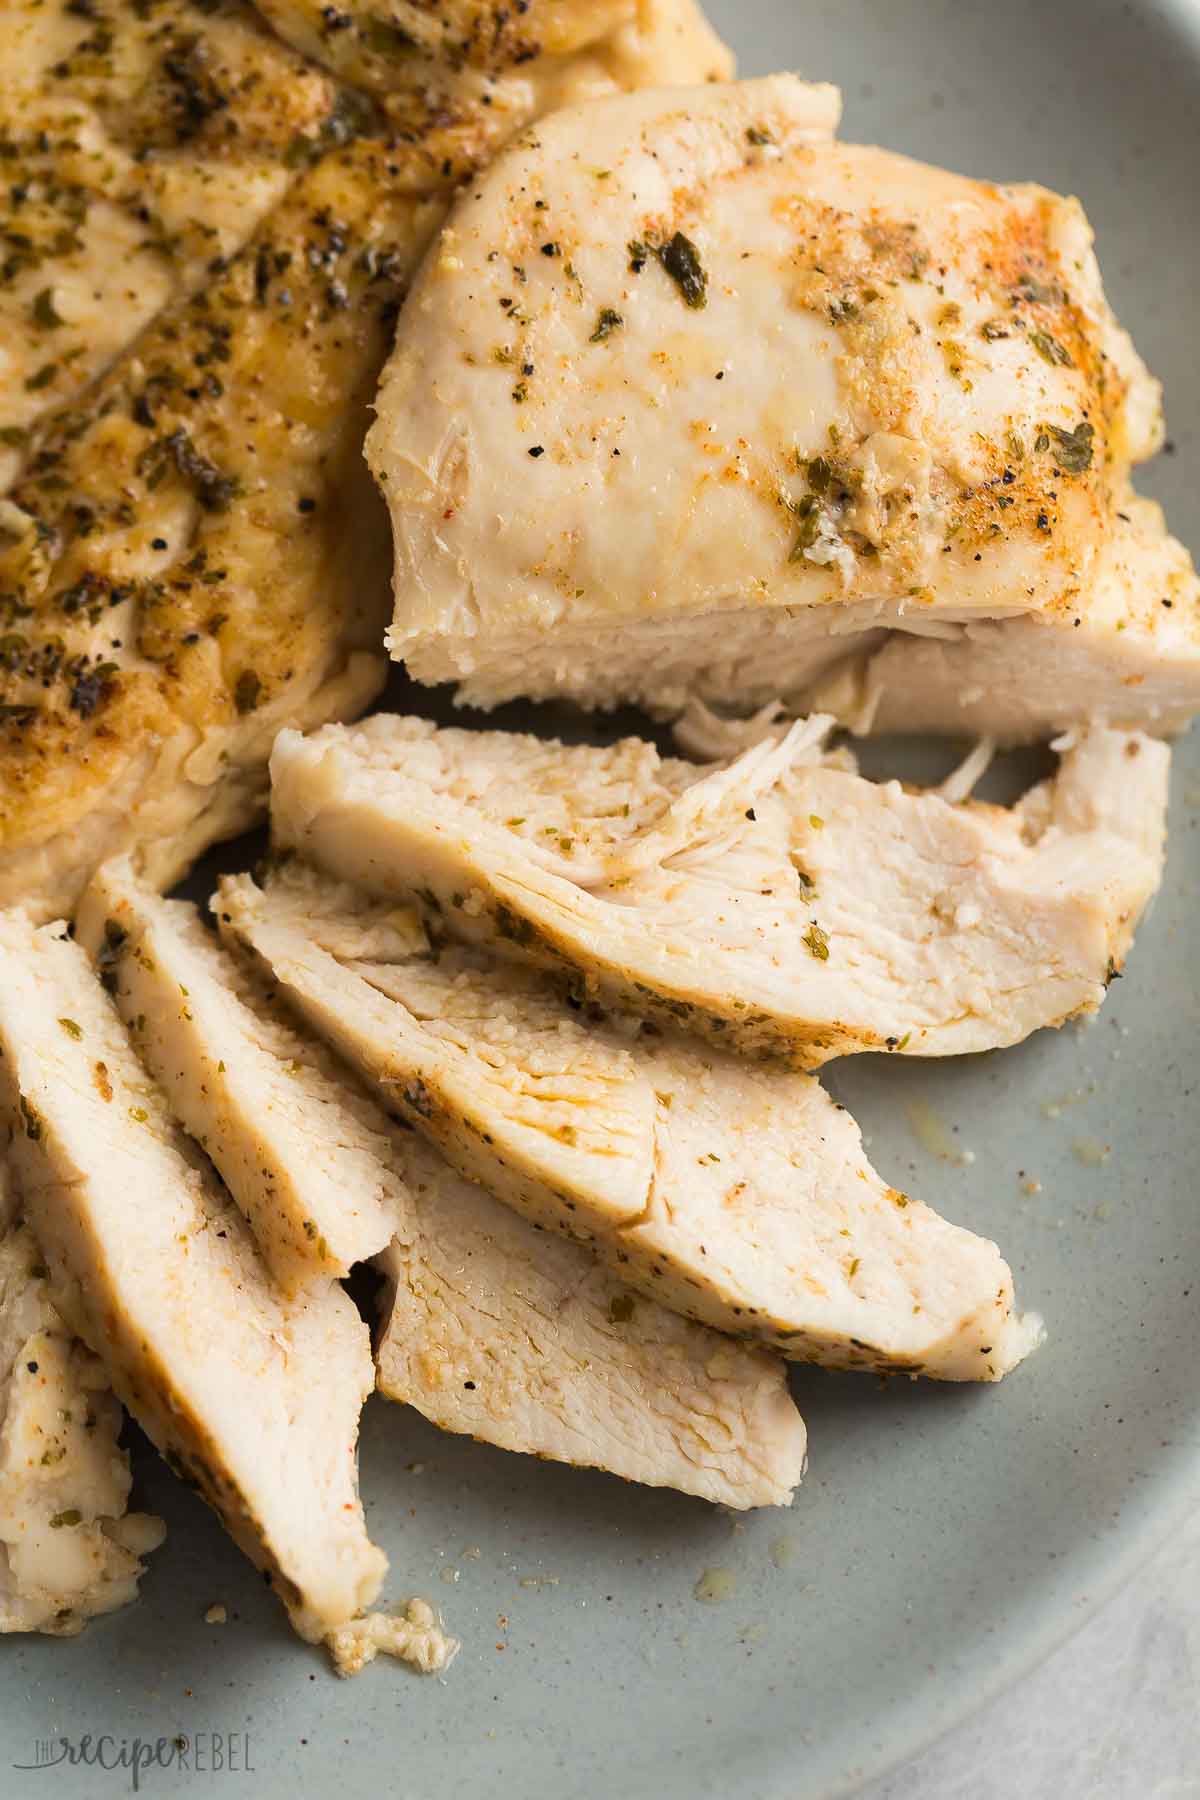 sliced crockpot chicken breast on grey plate.